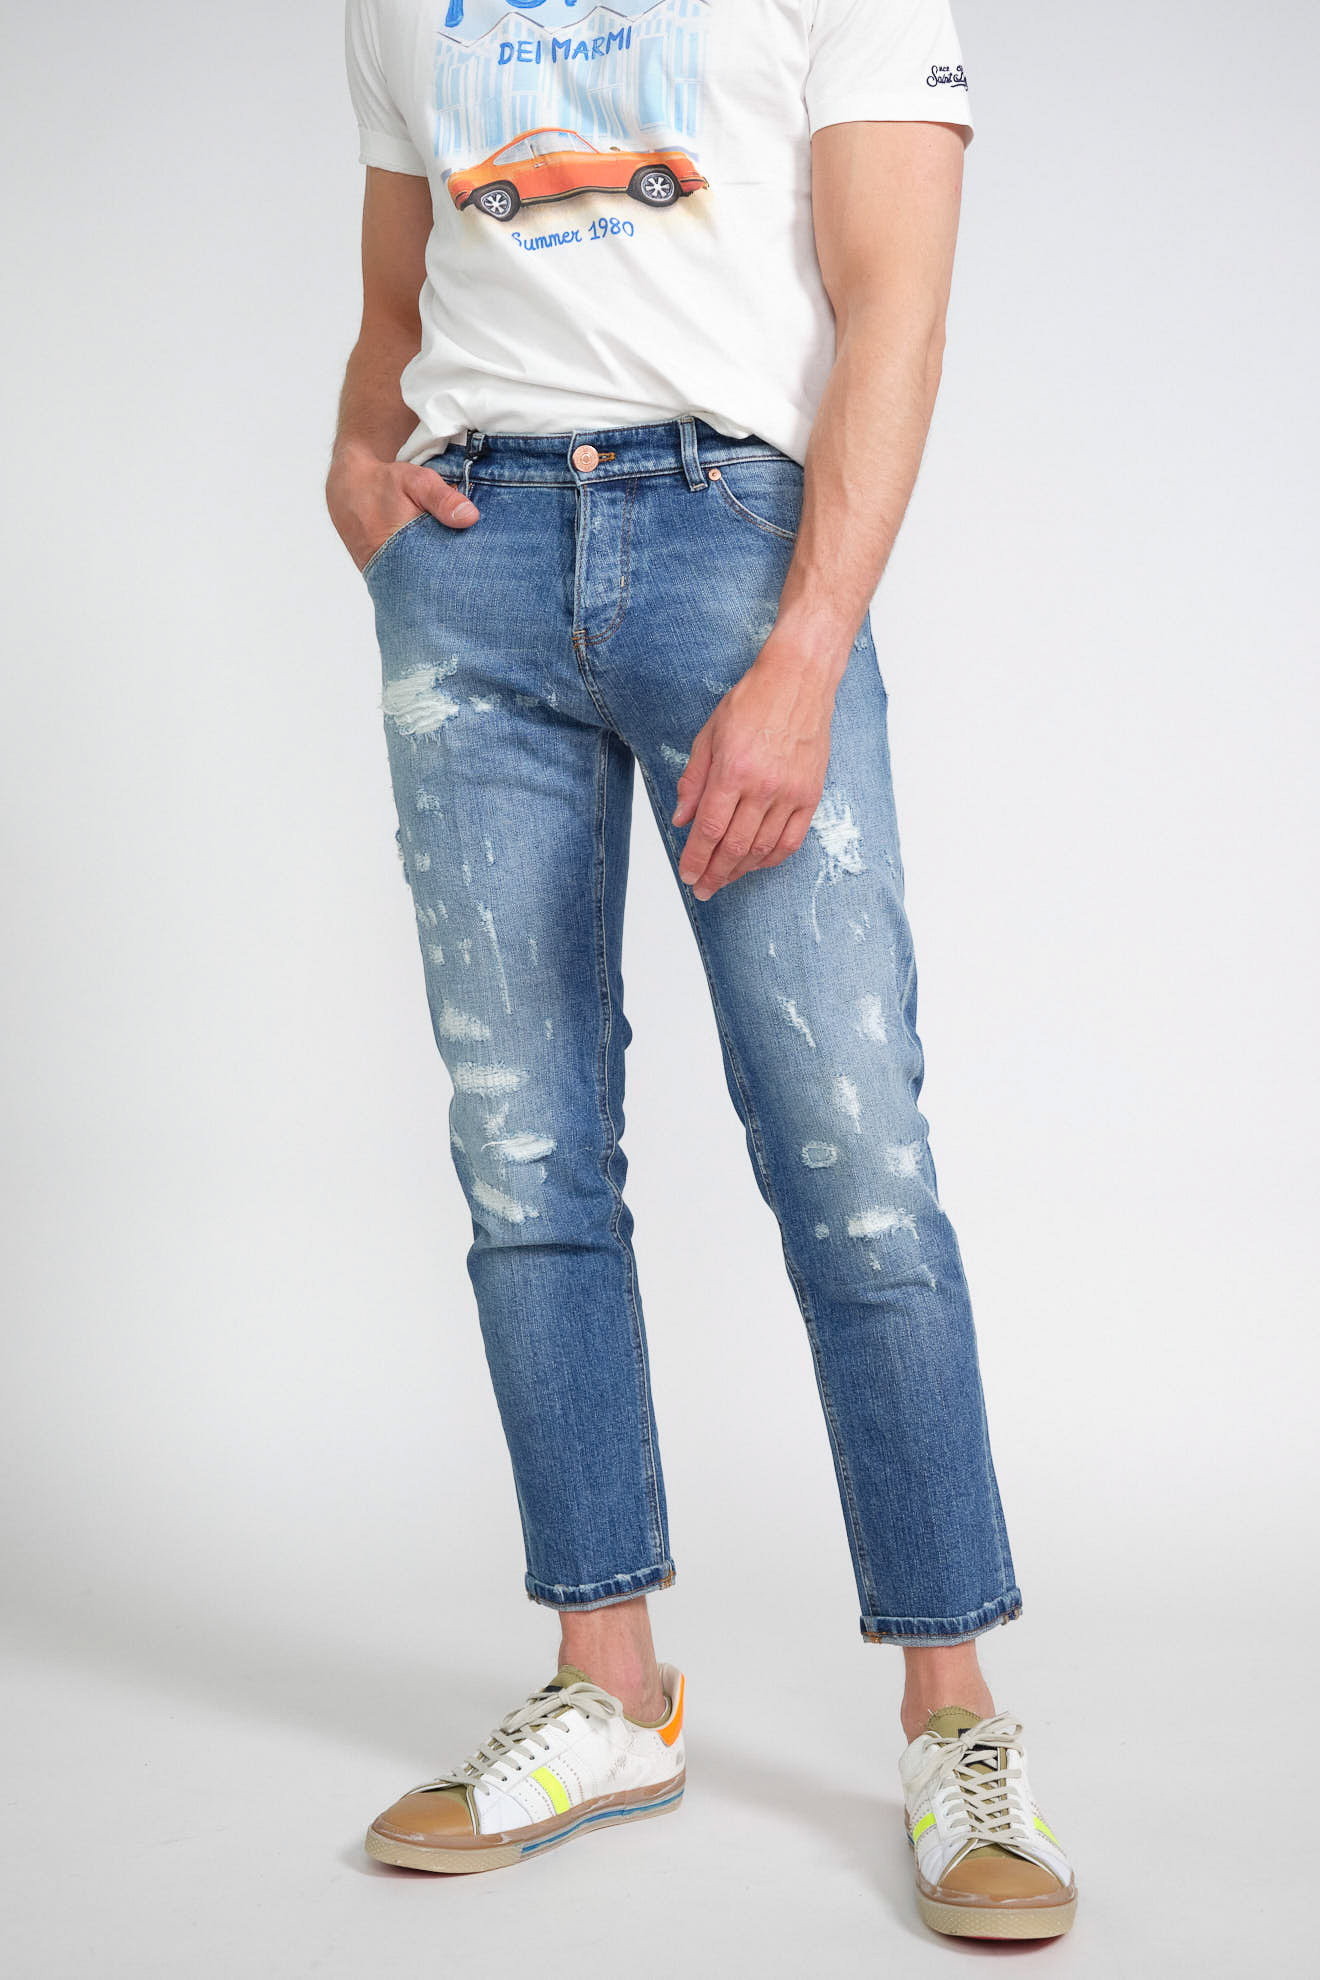 pt Torino jeans denim destroyed red detail cotton model front